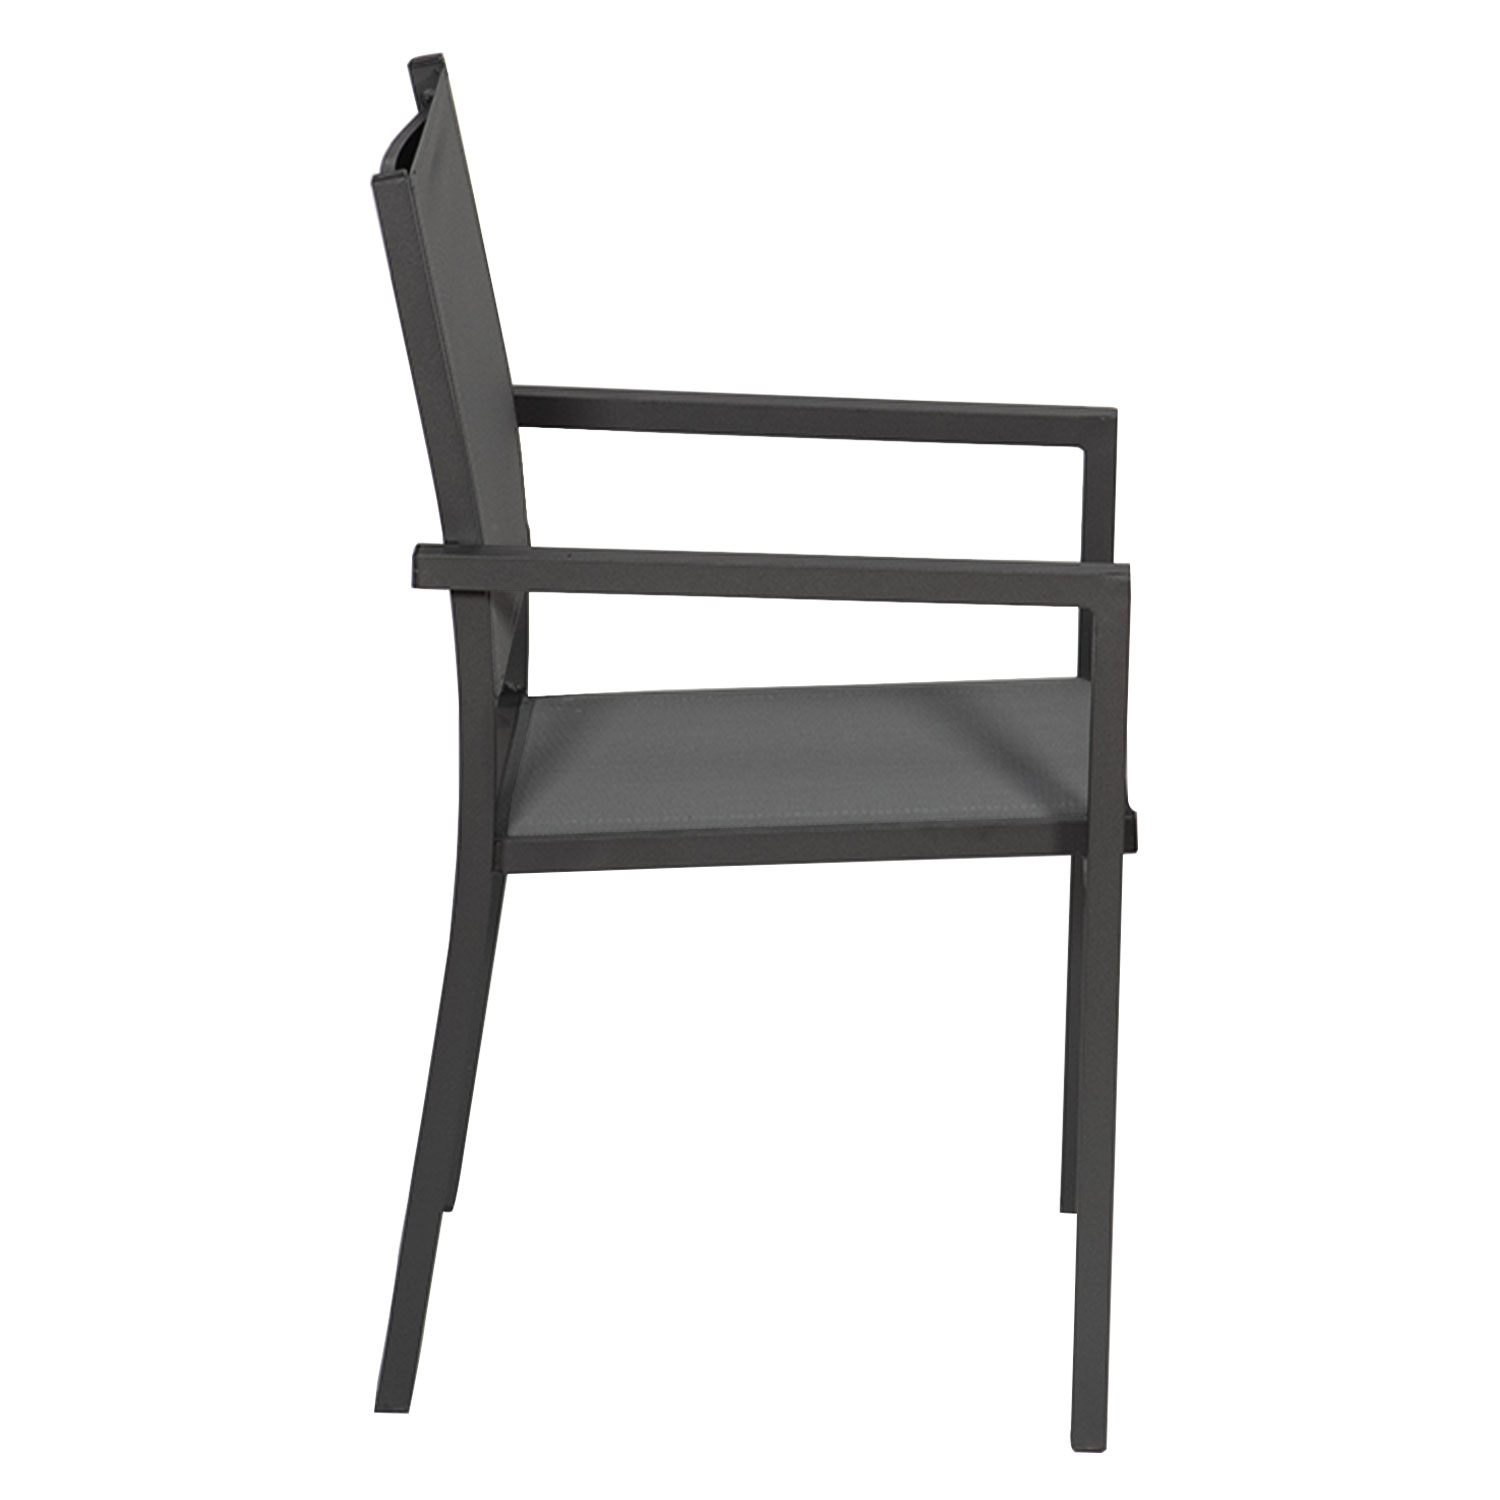 Juego de 10 sillas de aluminio antracita - textileno gris